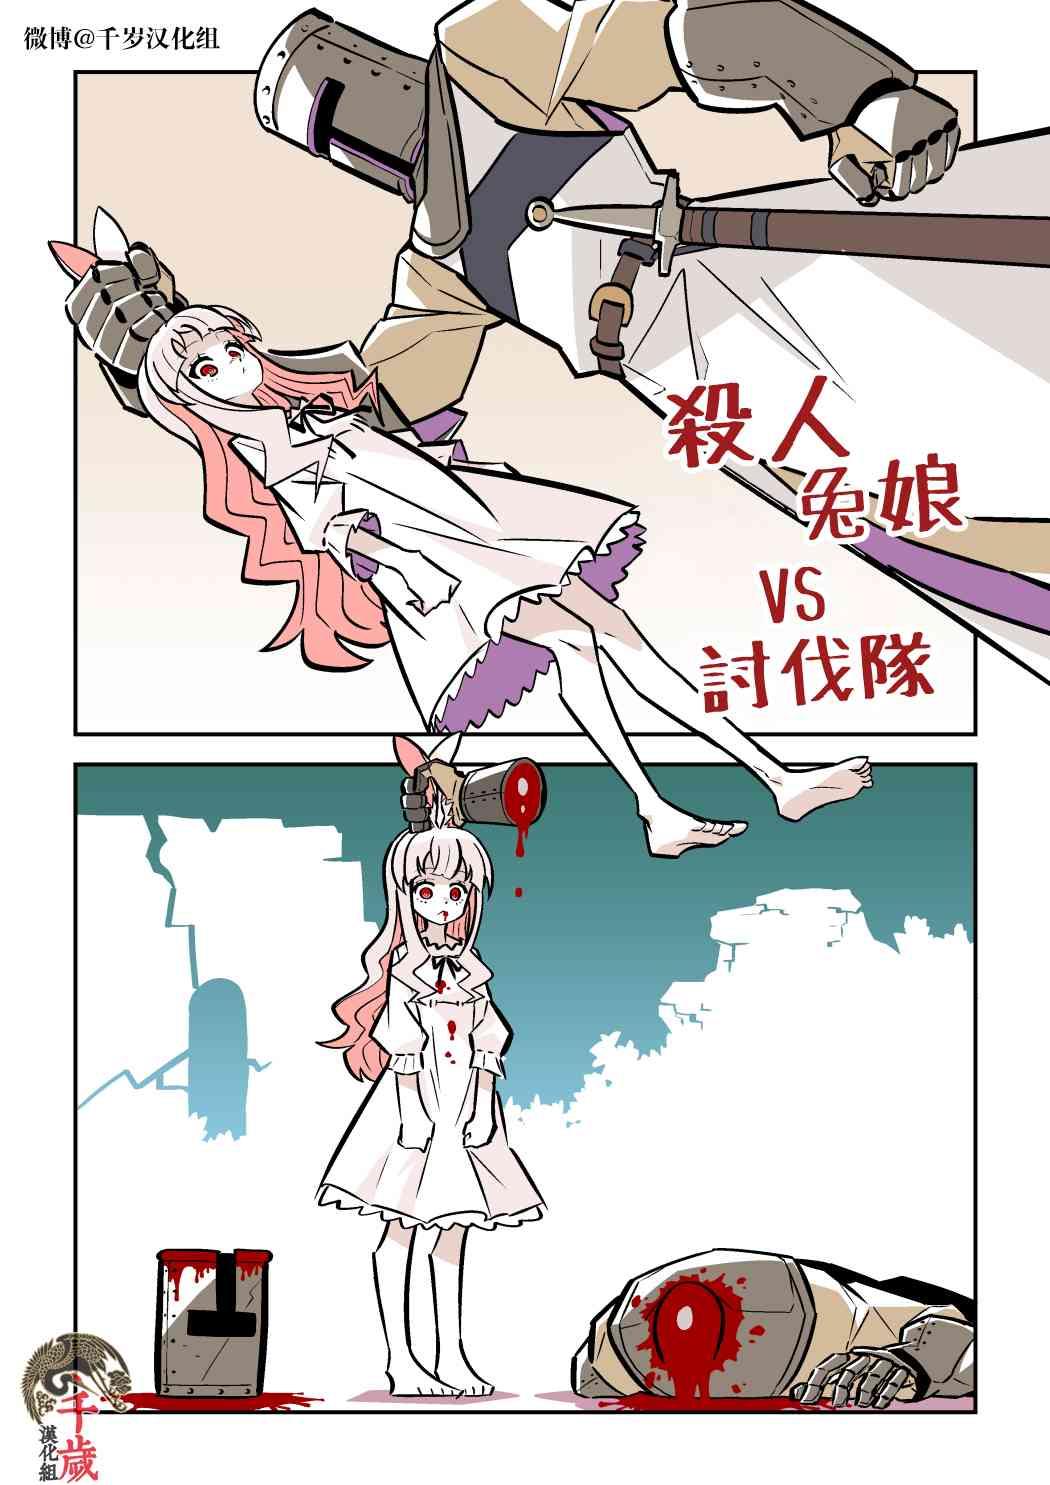 Murder Rabbit Girl vs Series 杀人兔娘 2